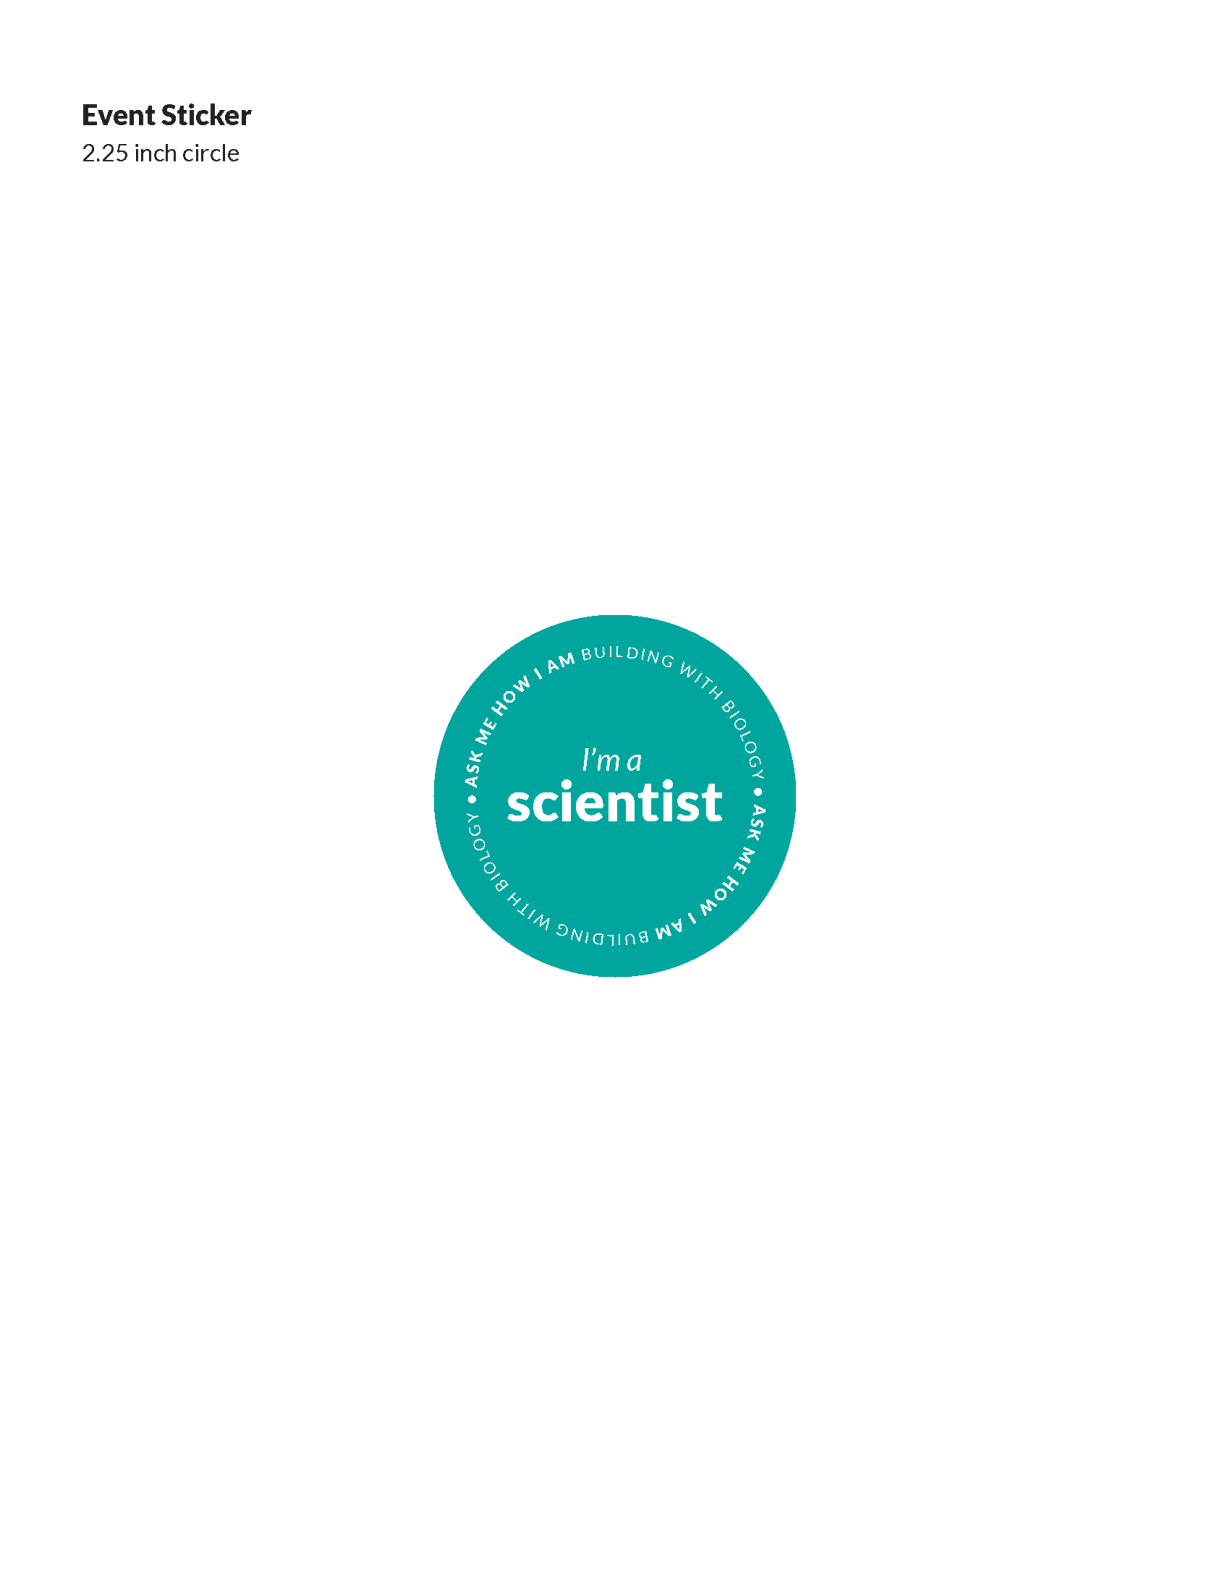 circular blue sticker labeled "I'm a scientist"